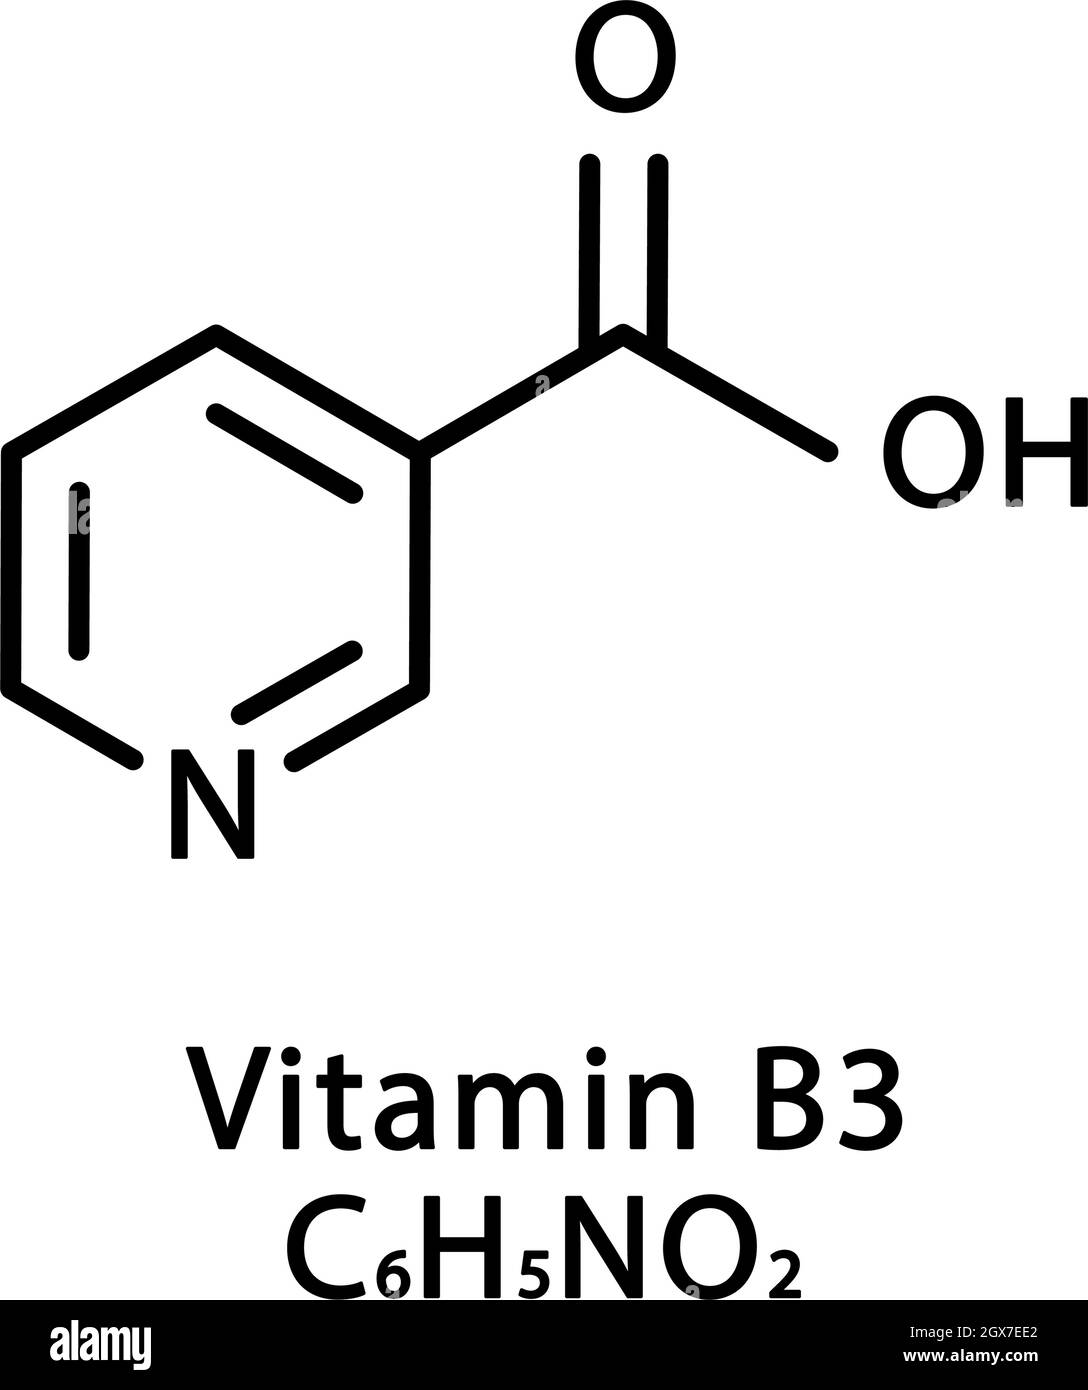 Vitamina B3 Niacina struttura molecolare. Vitamina B3 Niacina formula  chimica scheletrica. Formule molecolari chimiche Immagine e Vettoriale -  Alamy